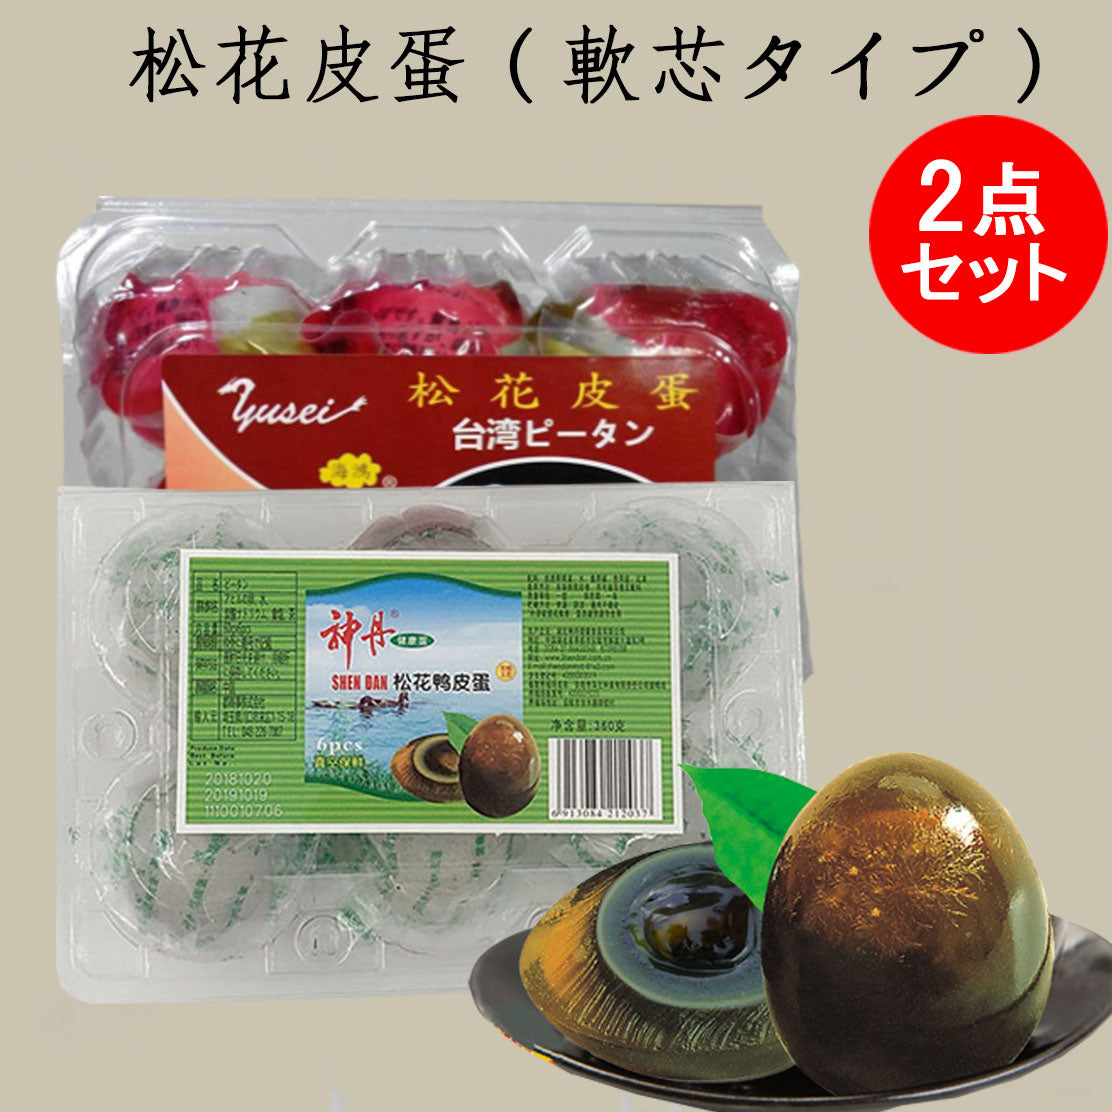 台湾松花皮蛋と神丹松花皮蛋ピータン 6個入×2盒